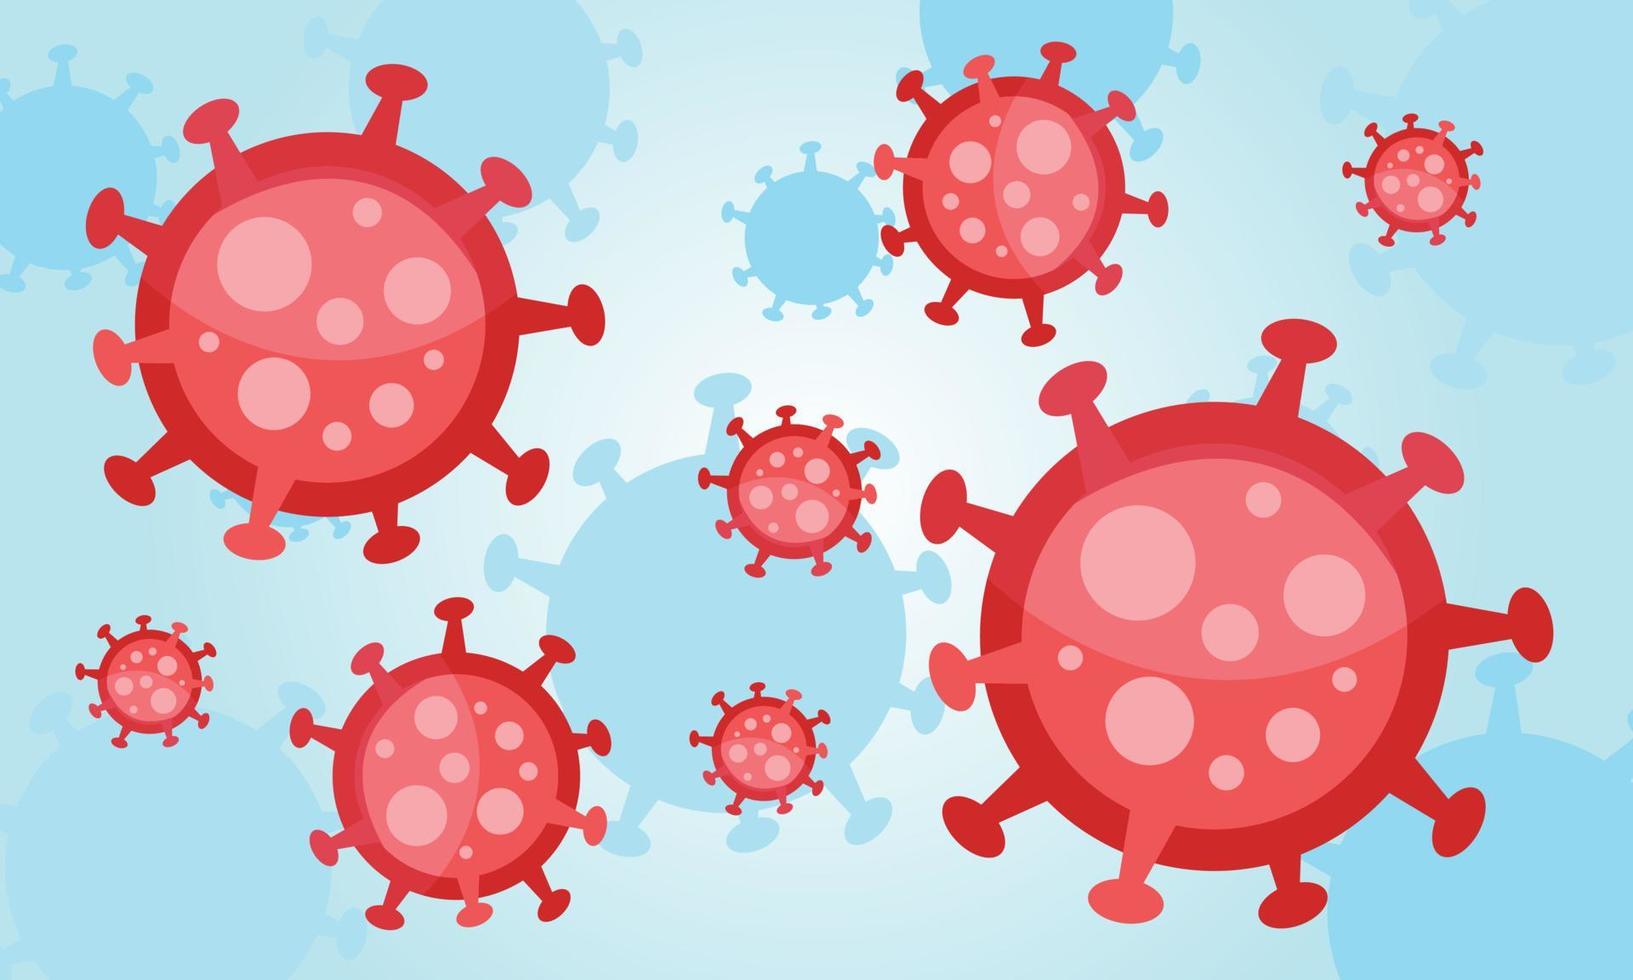 virus de la corona vectorial, icono covid-19, virus pandémico en segundo plano vector